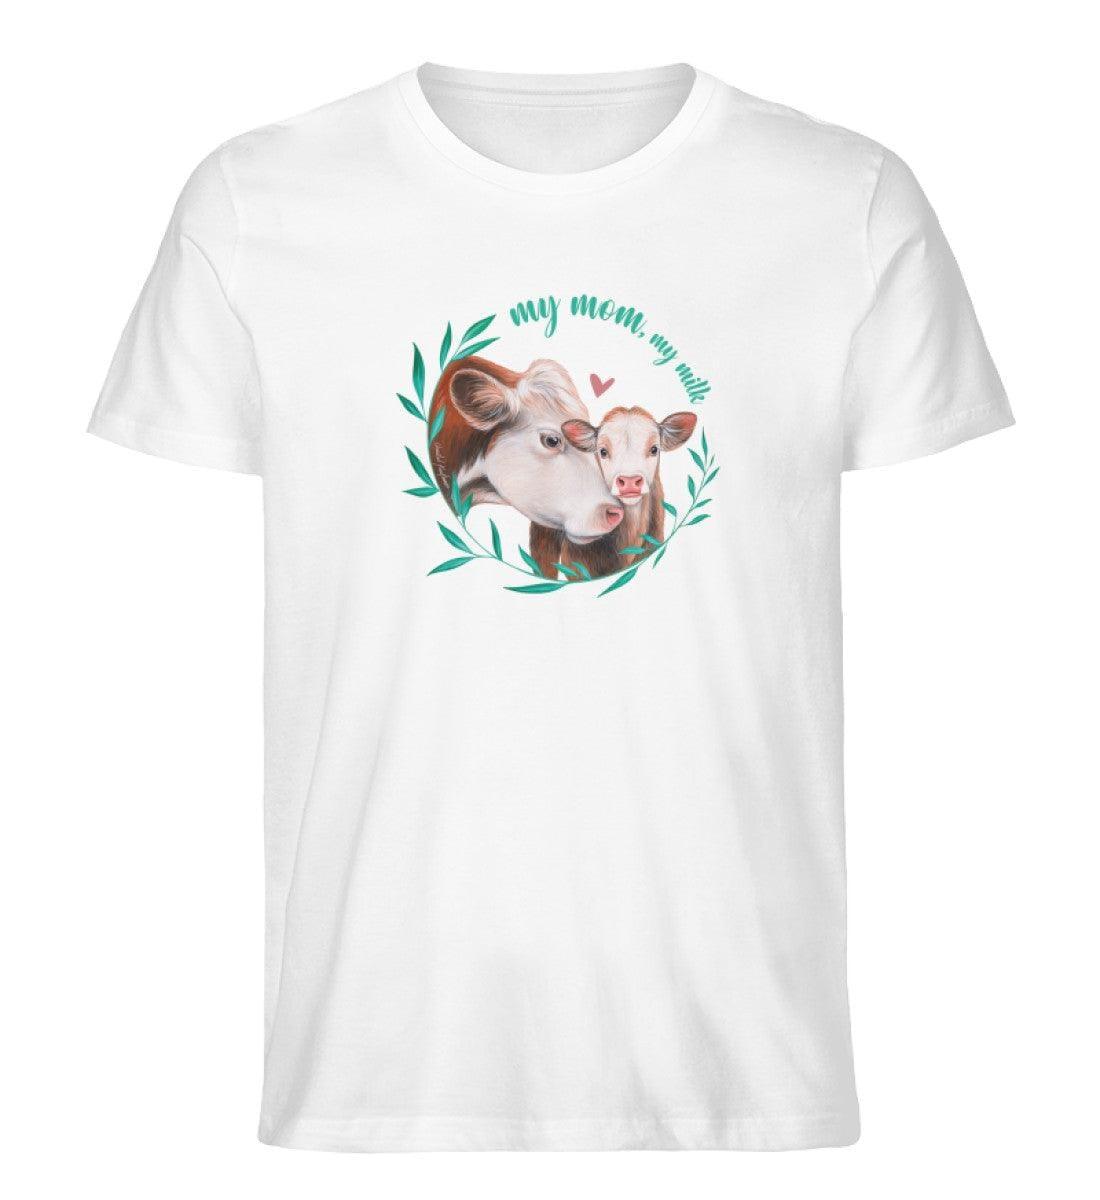 My mom, My milk [Chantal Kaufmann] - Unisex Organic Shirt Rocker T-Shirt ST/ST Shirtee White S 